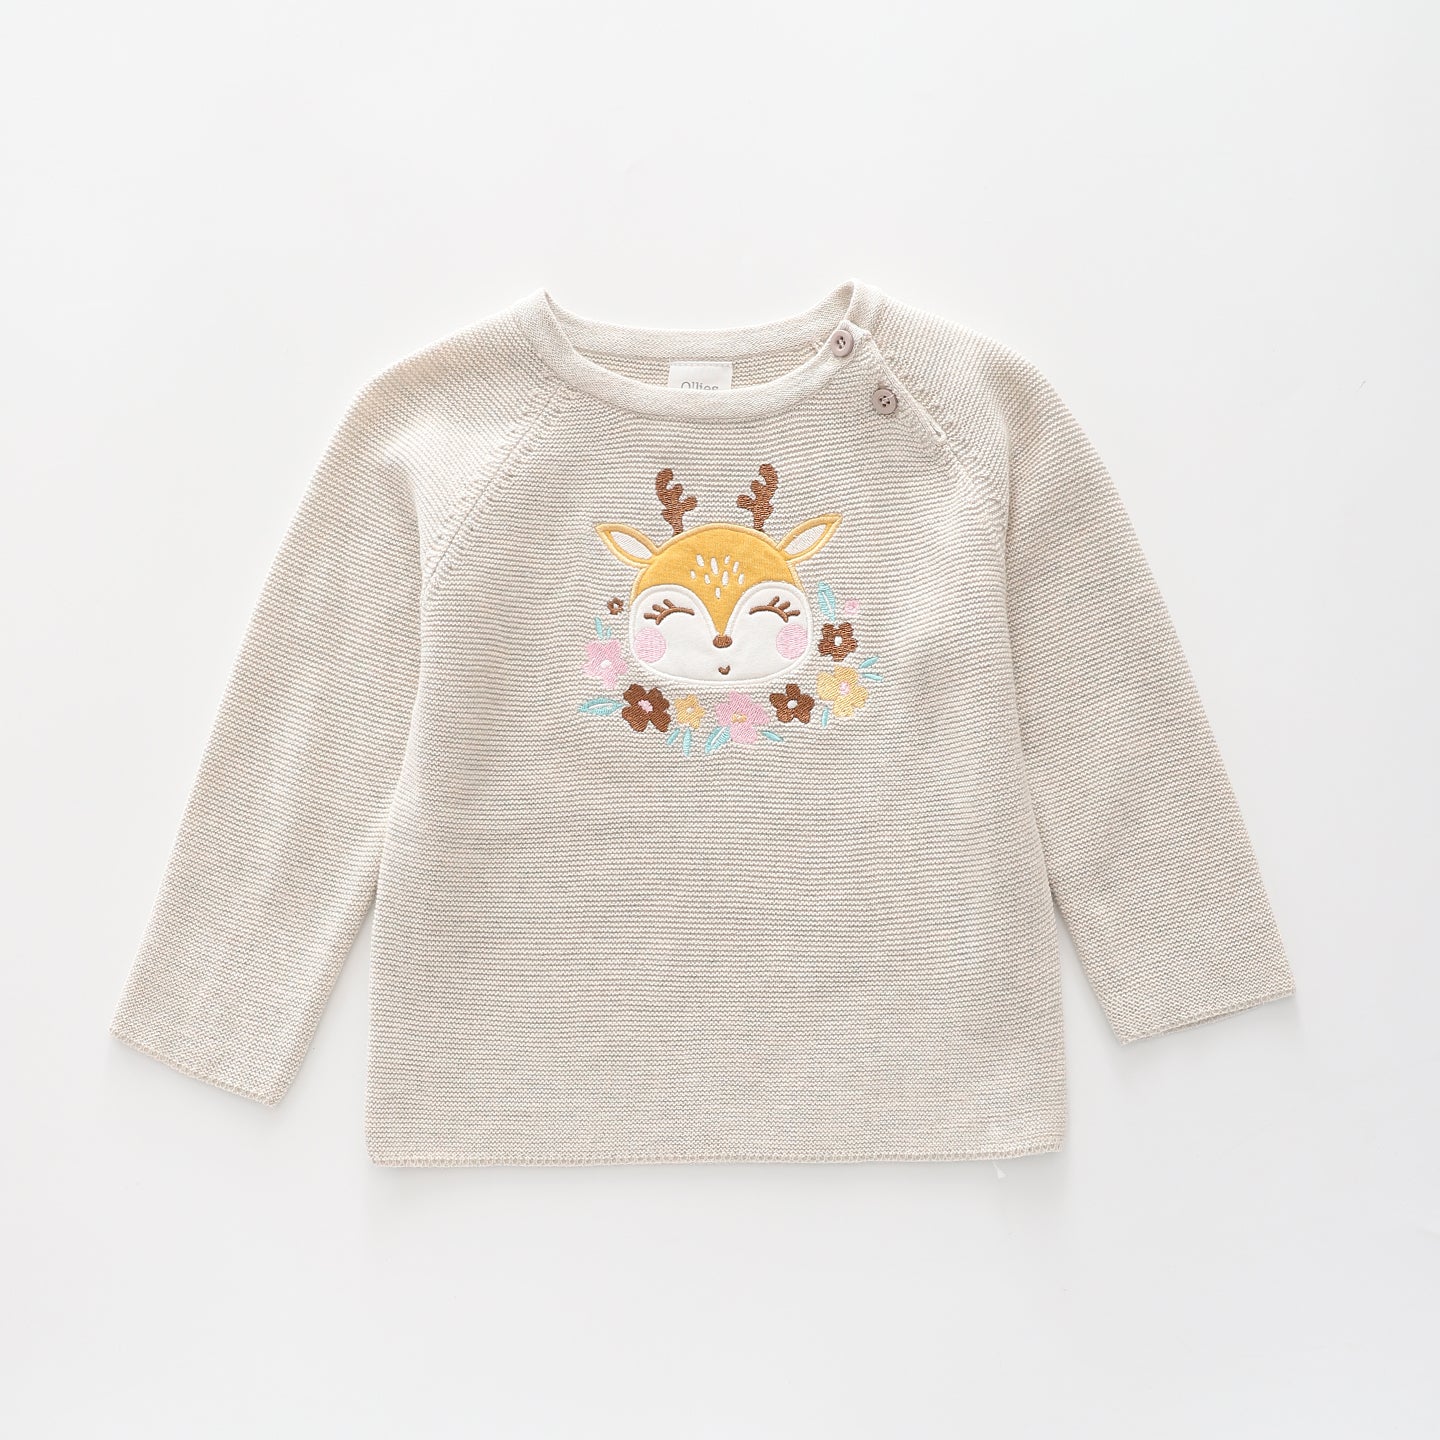 Vintage Deer, Baby Girls Knit